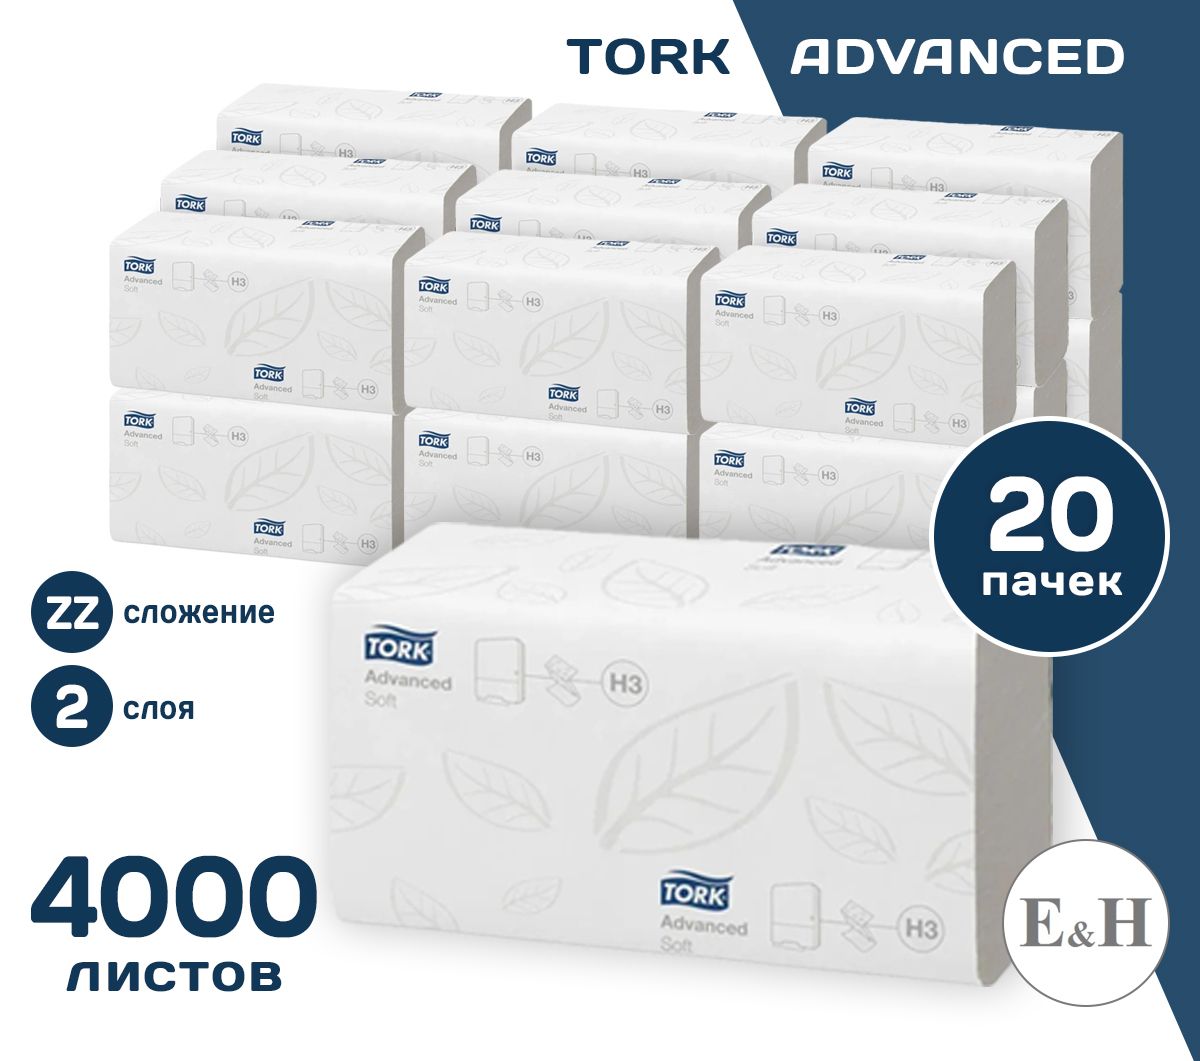 Полотенца tork zz h3. 290184 Торк полотенца бумажные. Торк ZZ 120108. Полотенца листовые торк Singlefold Advanced ZZ, 2-сл, h3, 200 лист, арт.290184 /20. Tork бумажные полотенца ZZ-сложения листовые для диспенсеров Advanced.